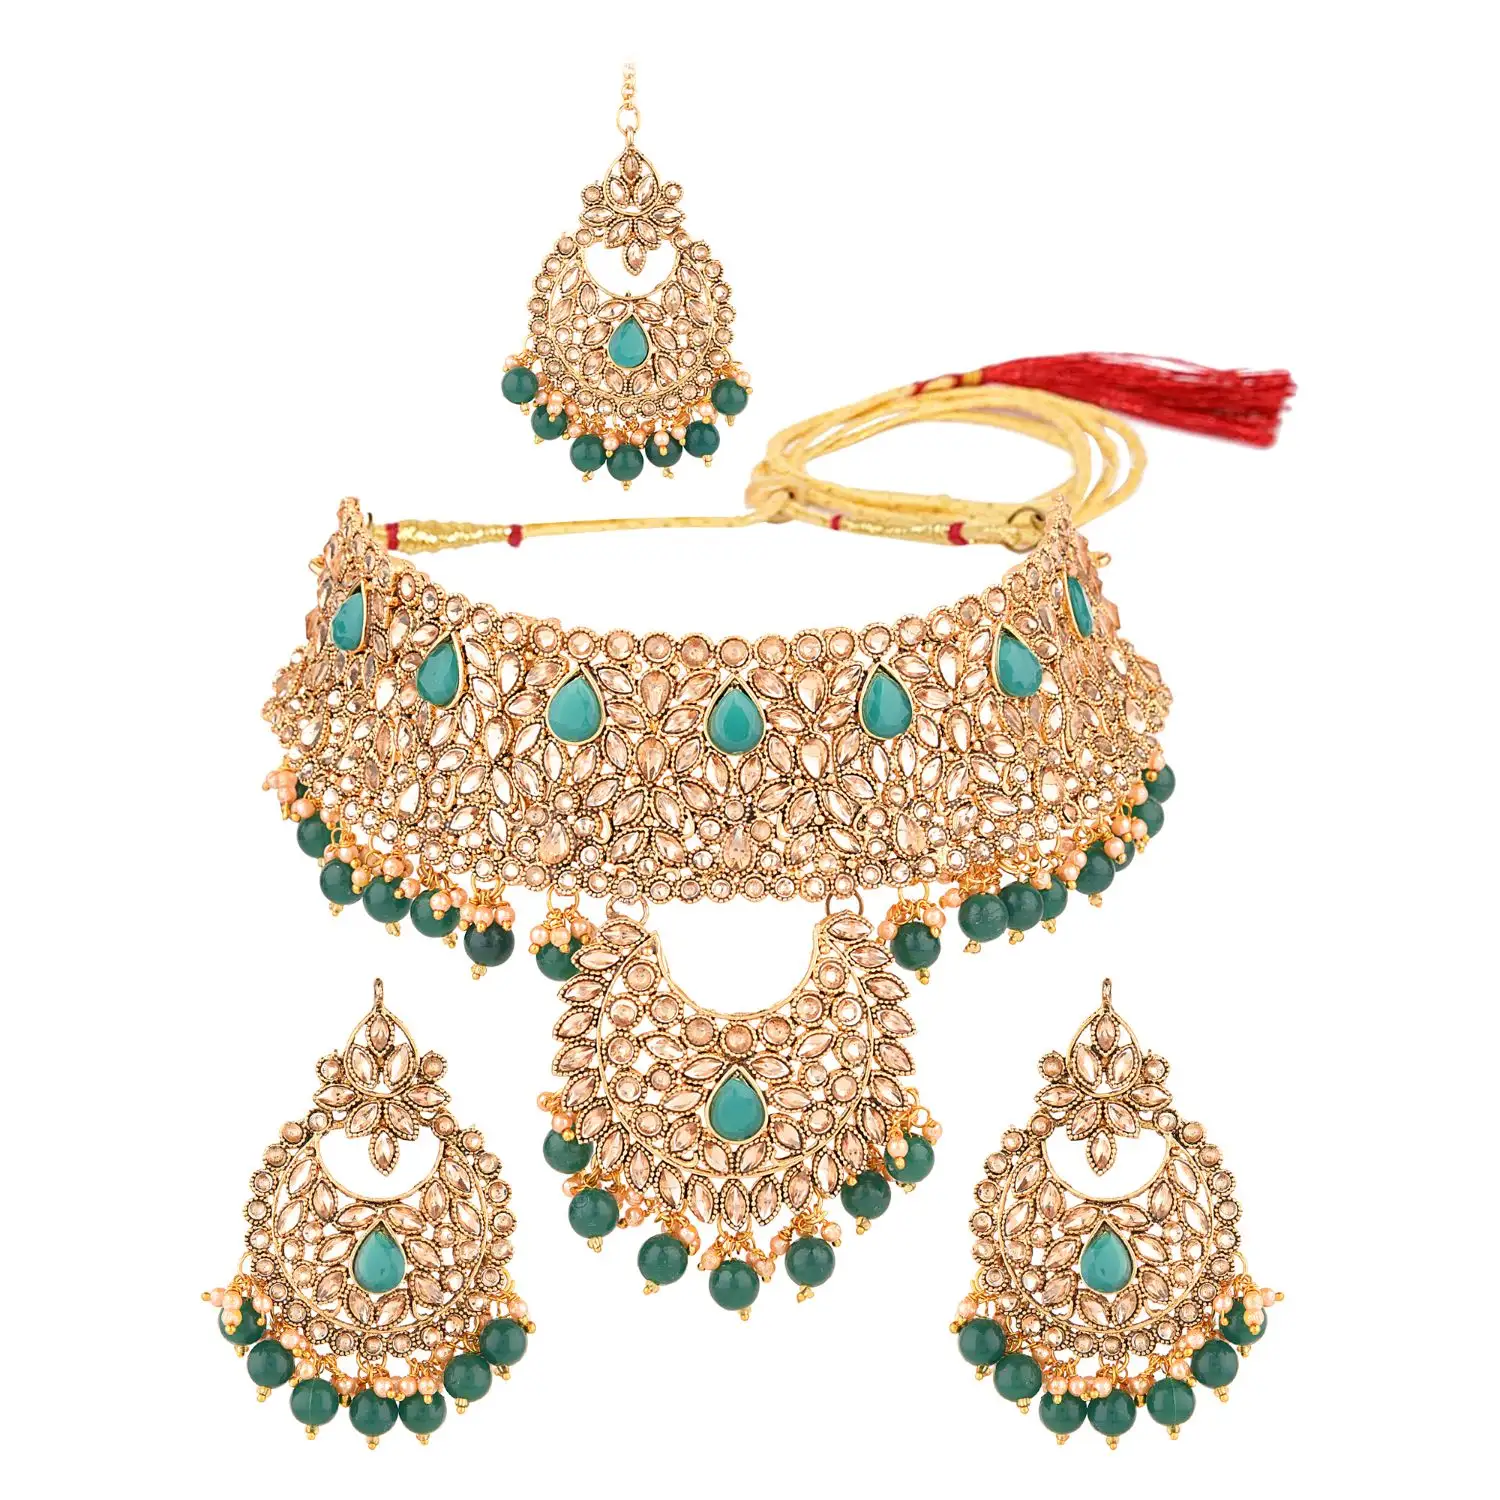 Indian Bollywood Choker Crystal Faux Pearl Kundan Necklace Earrings Maang Tikka Head Chain Jewelry